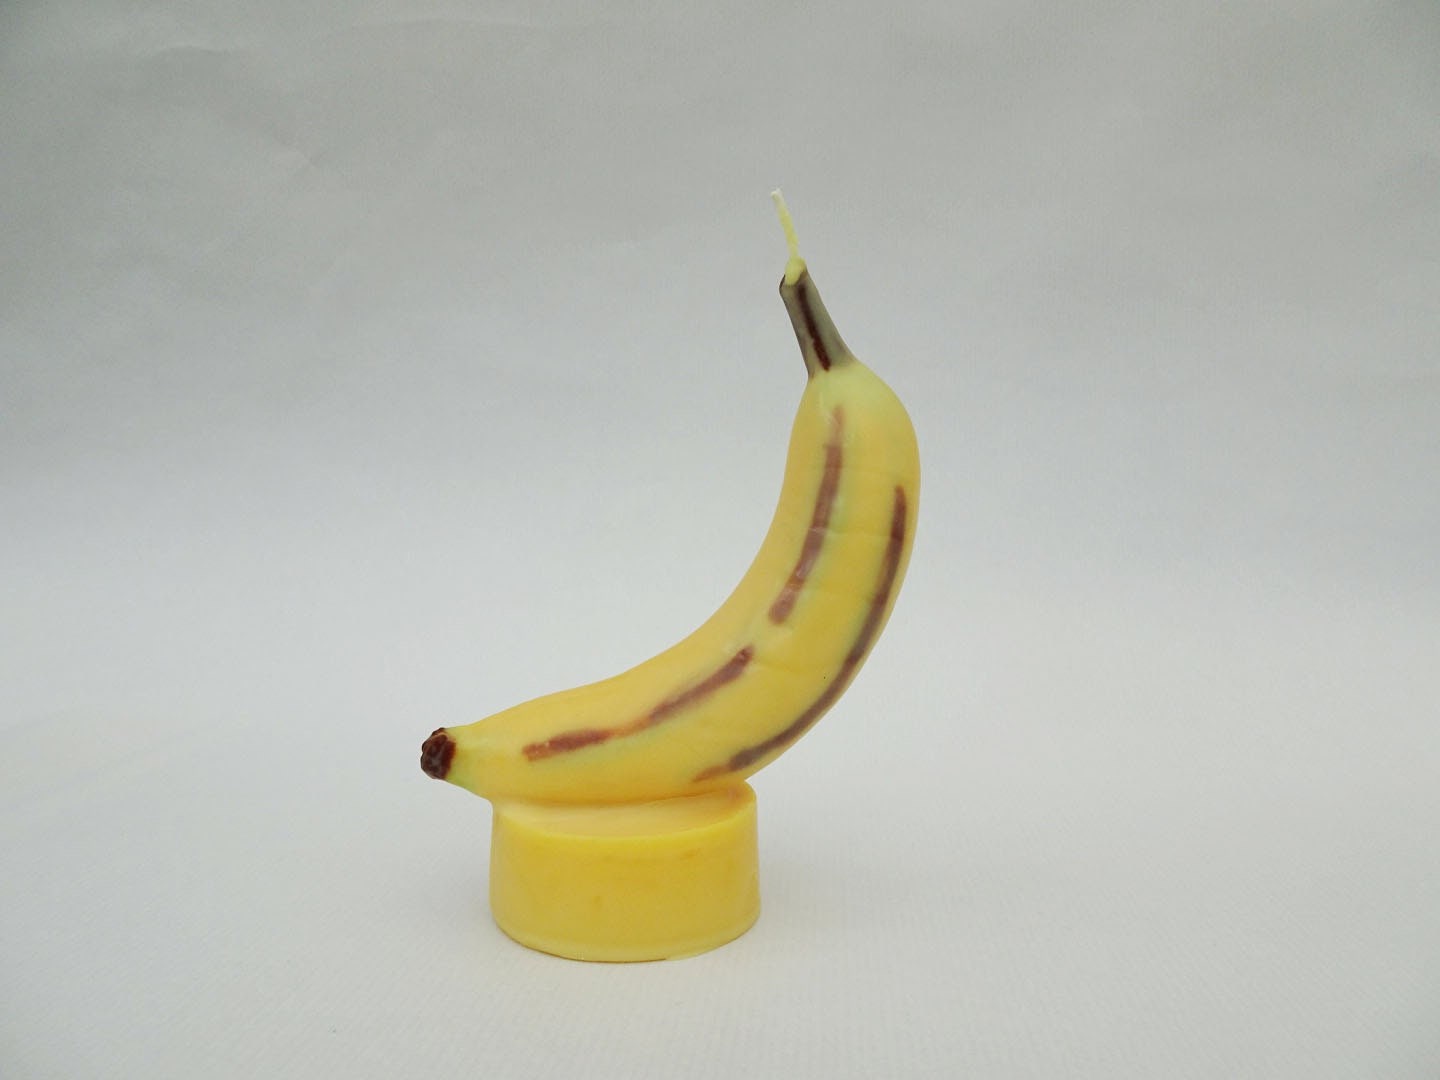 The Banana Candle